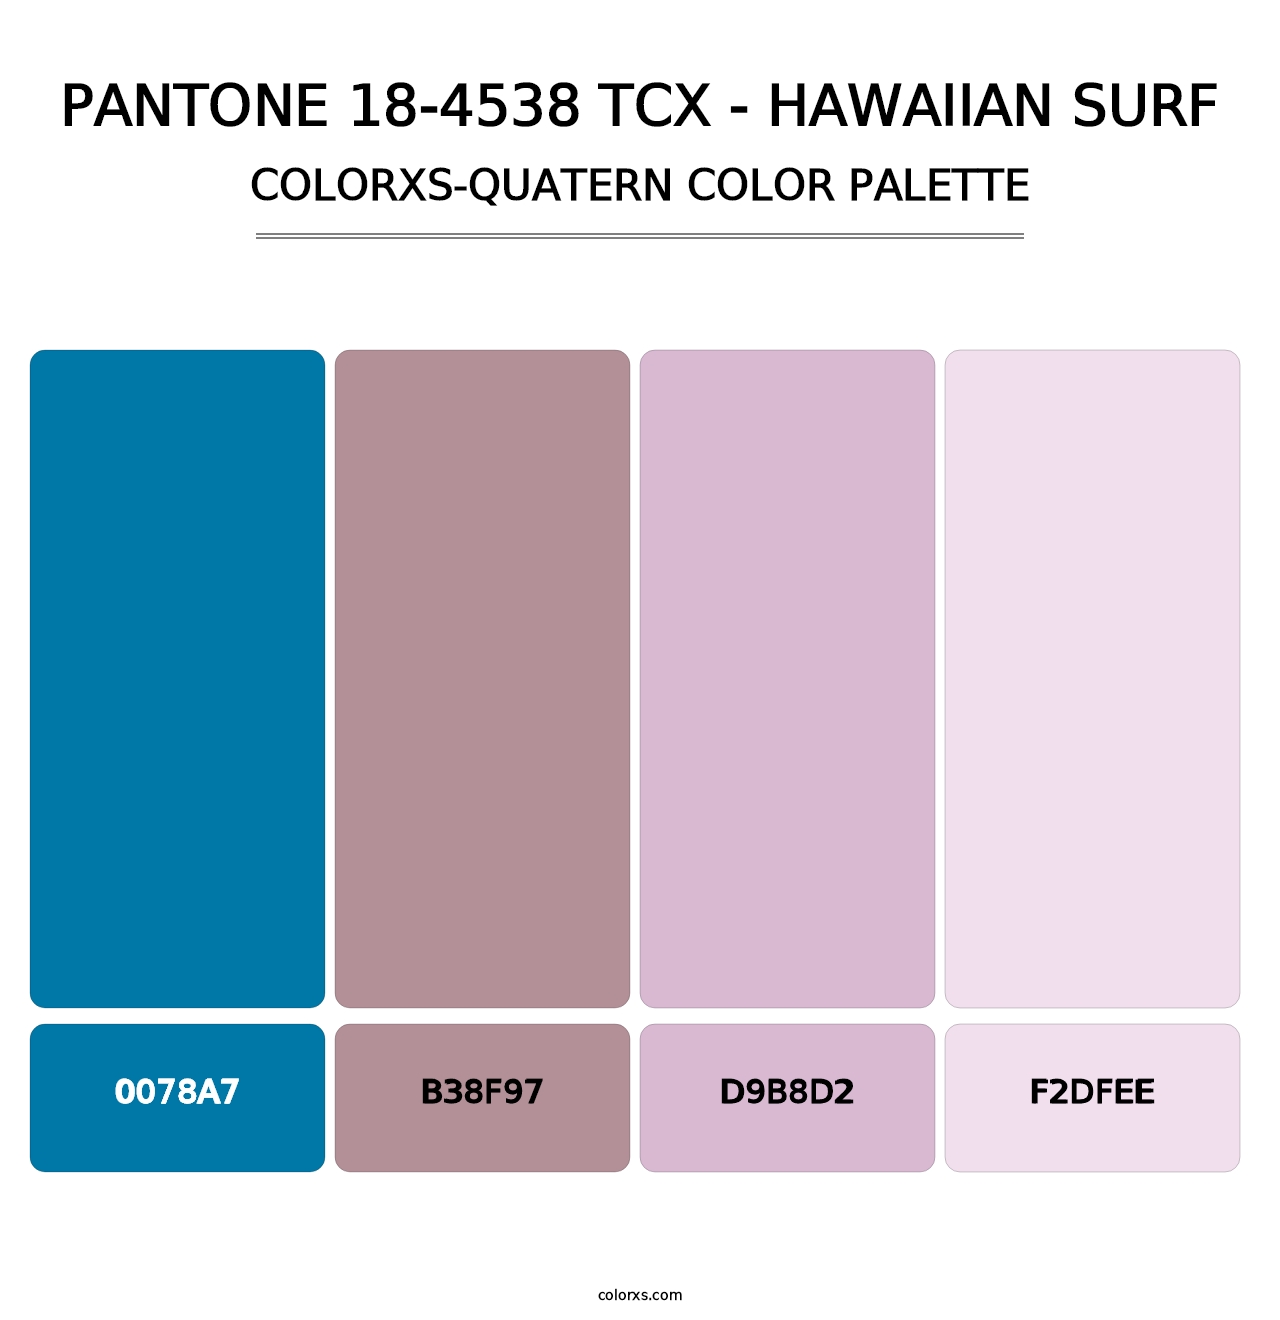 PANTONE 18-4538 TCX - Hawaiian Surf - Colorxs Quatern Palette